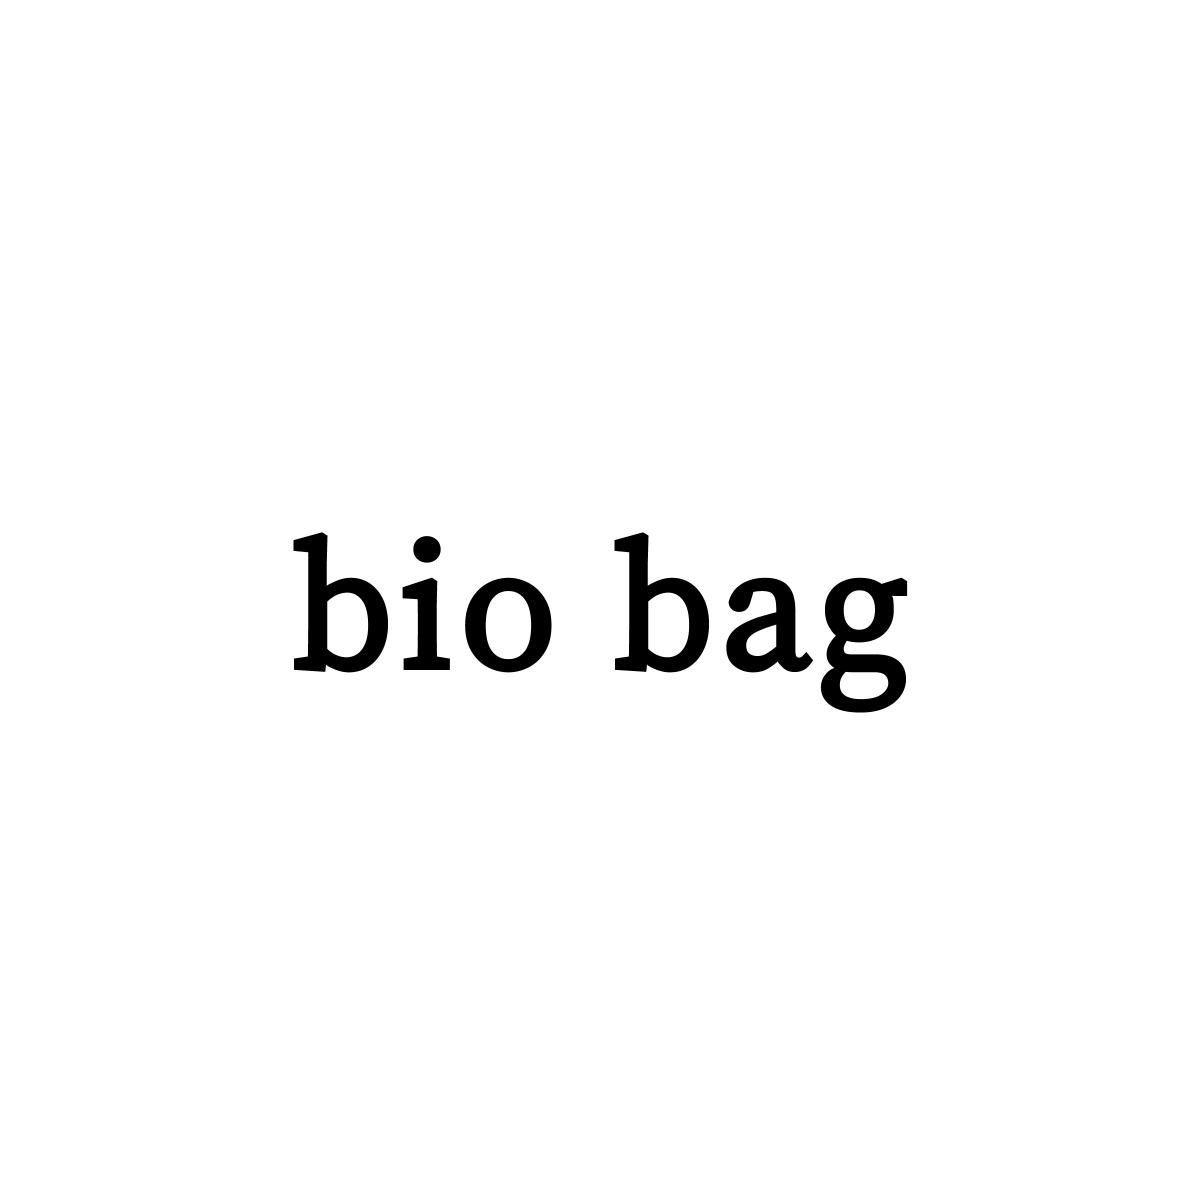 bio baglogo